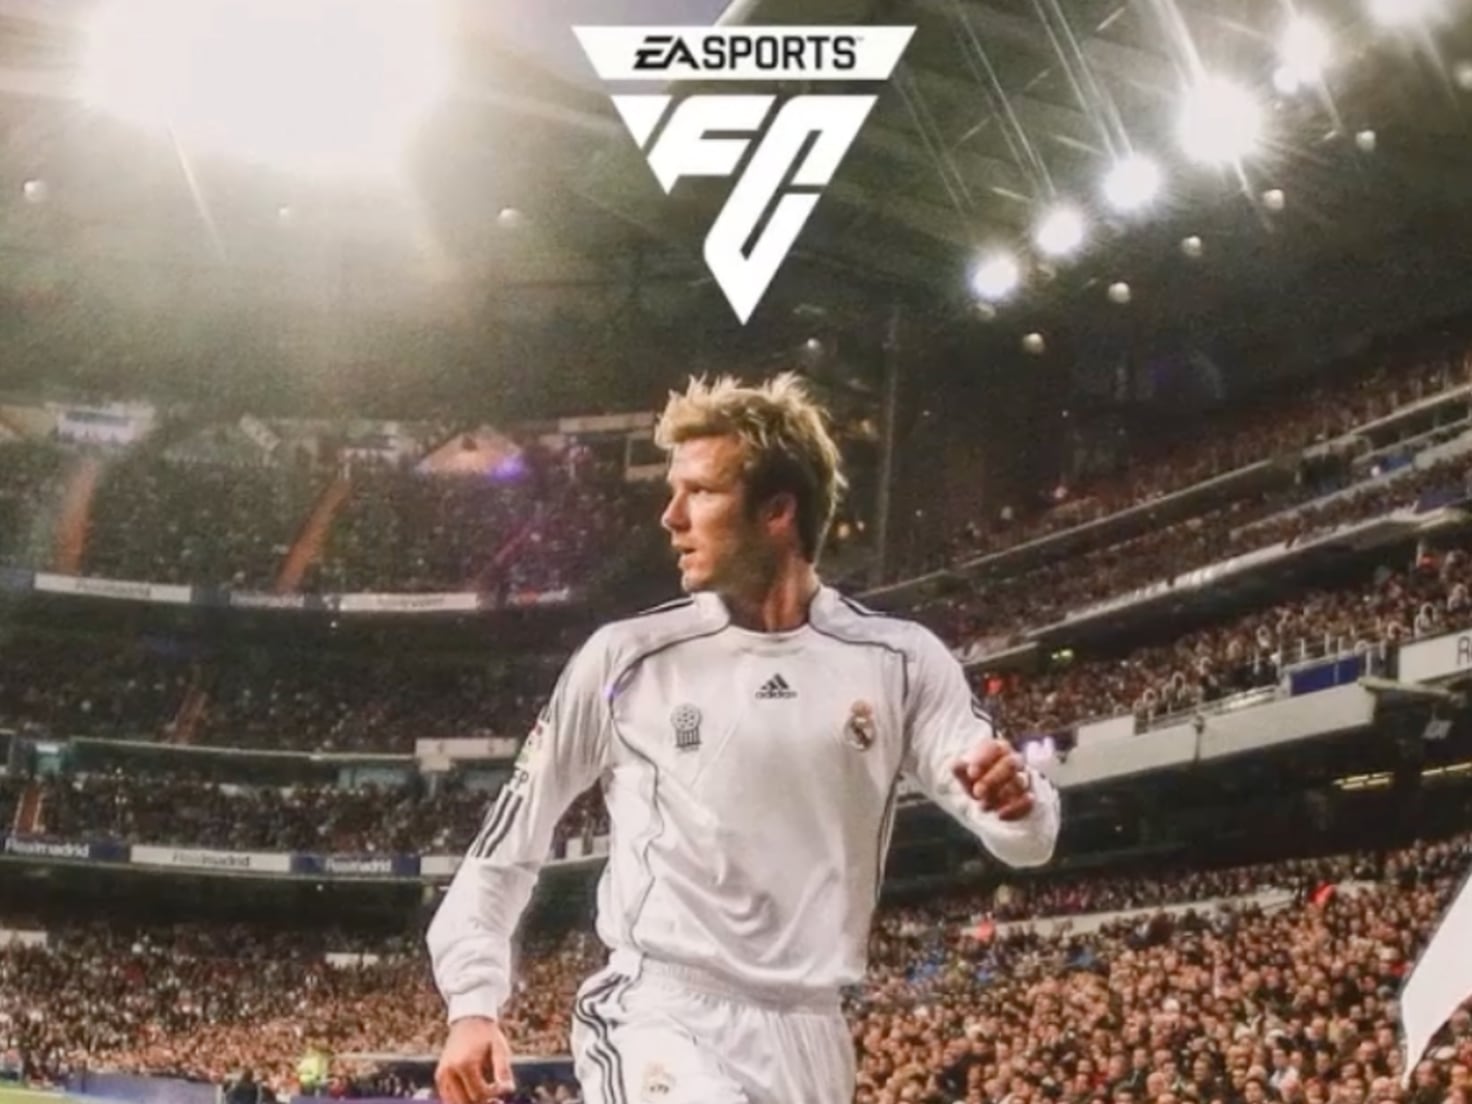 FIFA 22: EA Sports Reveals Official Teams & Leagues List